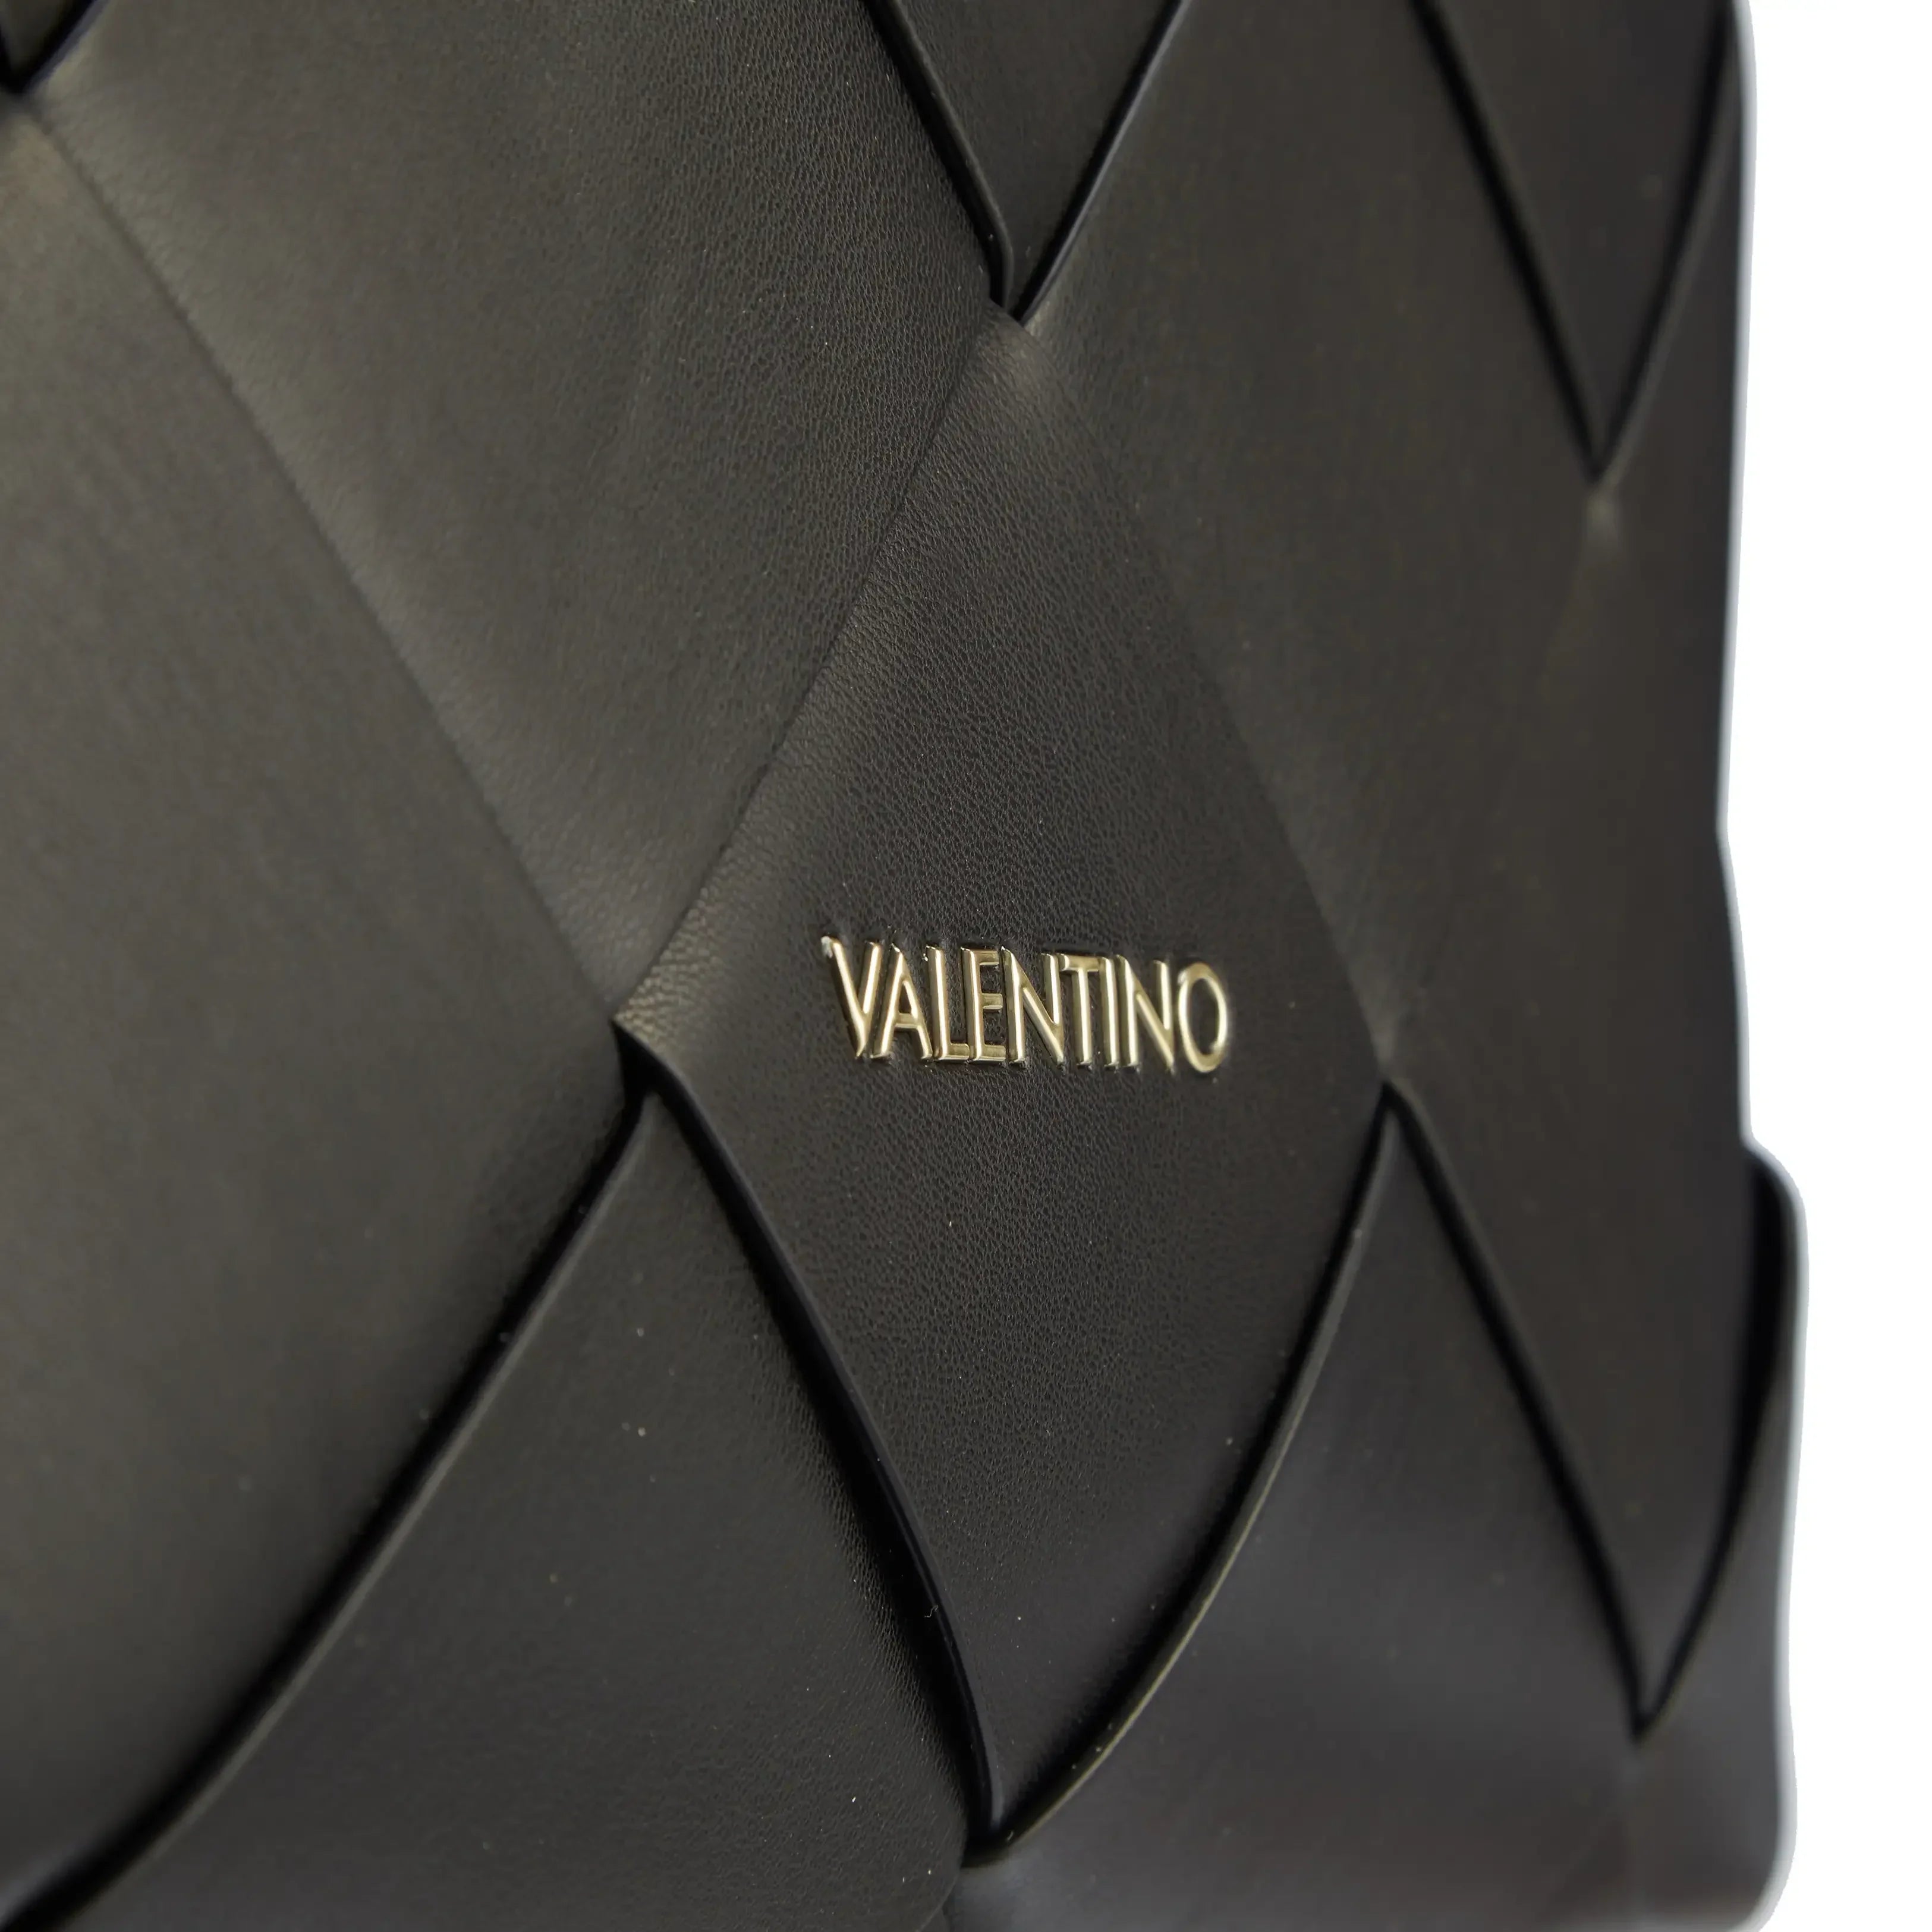 Valentino Bags Ibiza handbag 34 cm - off white